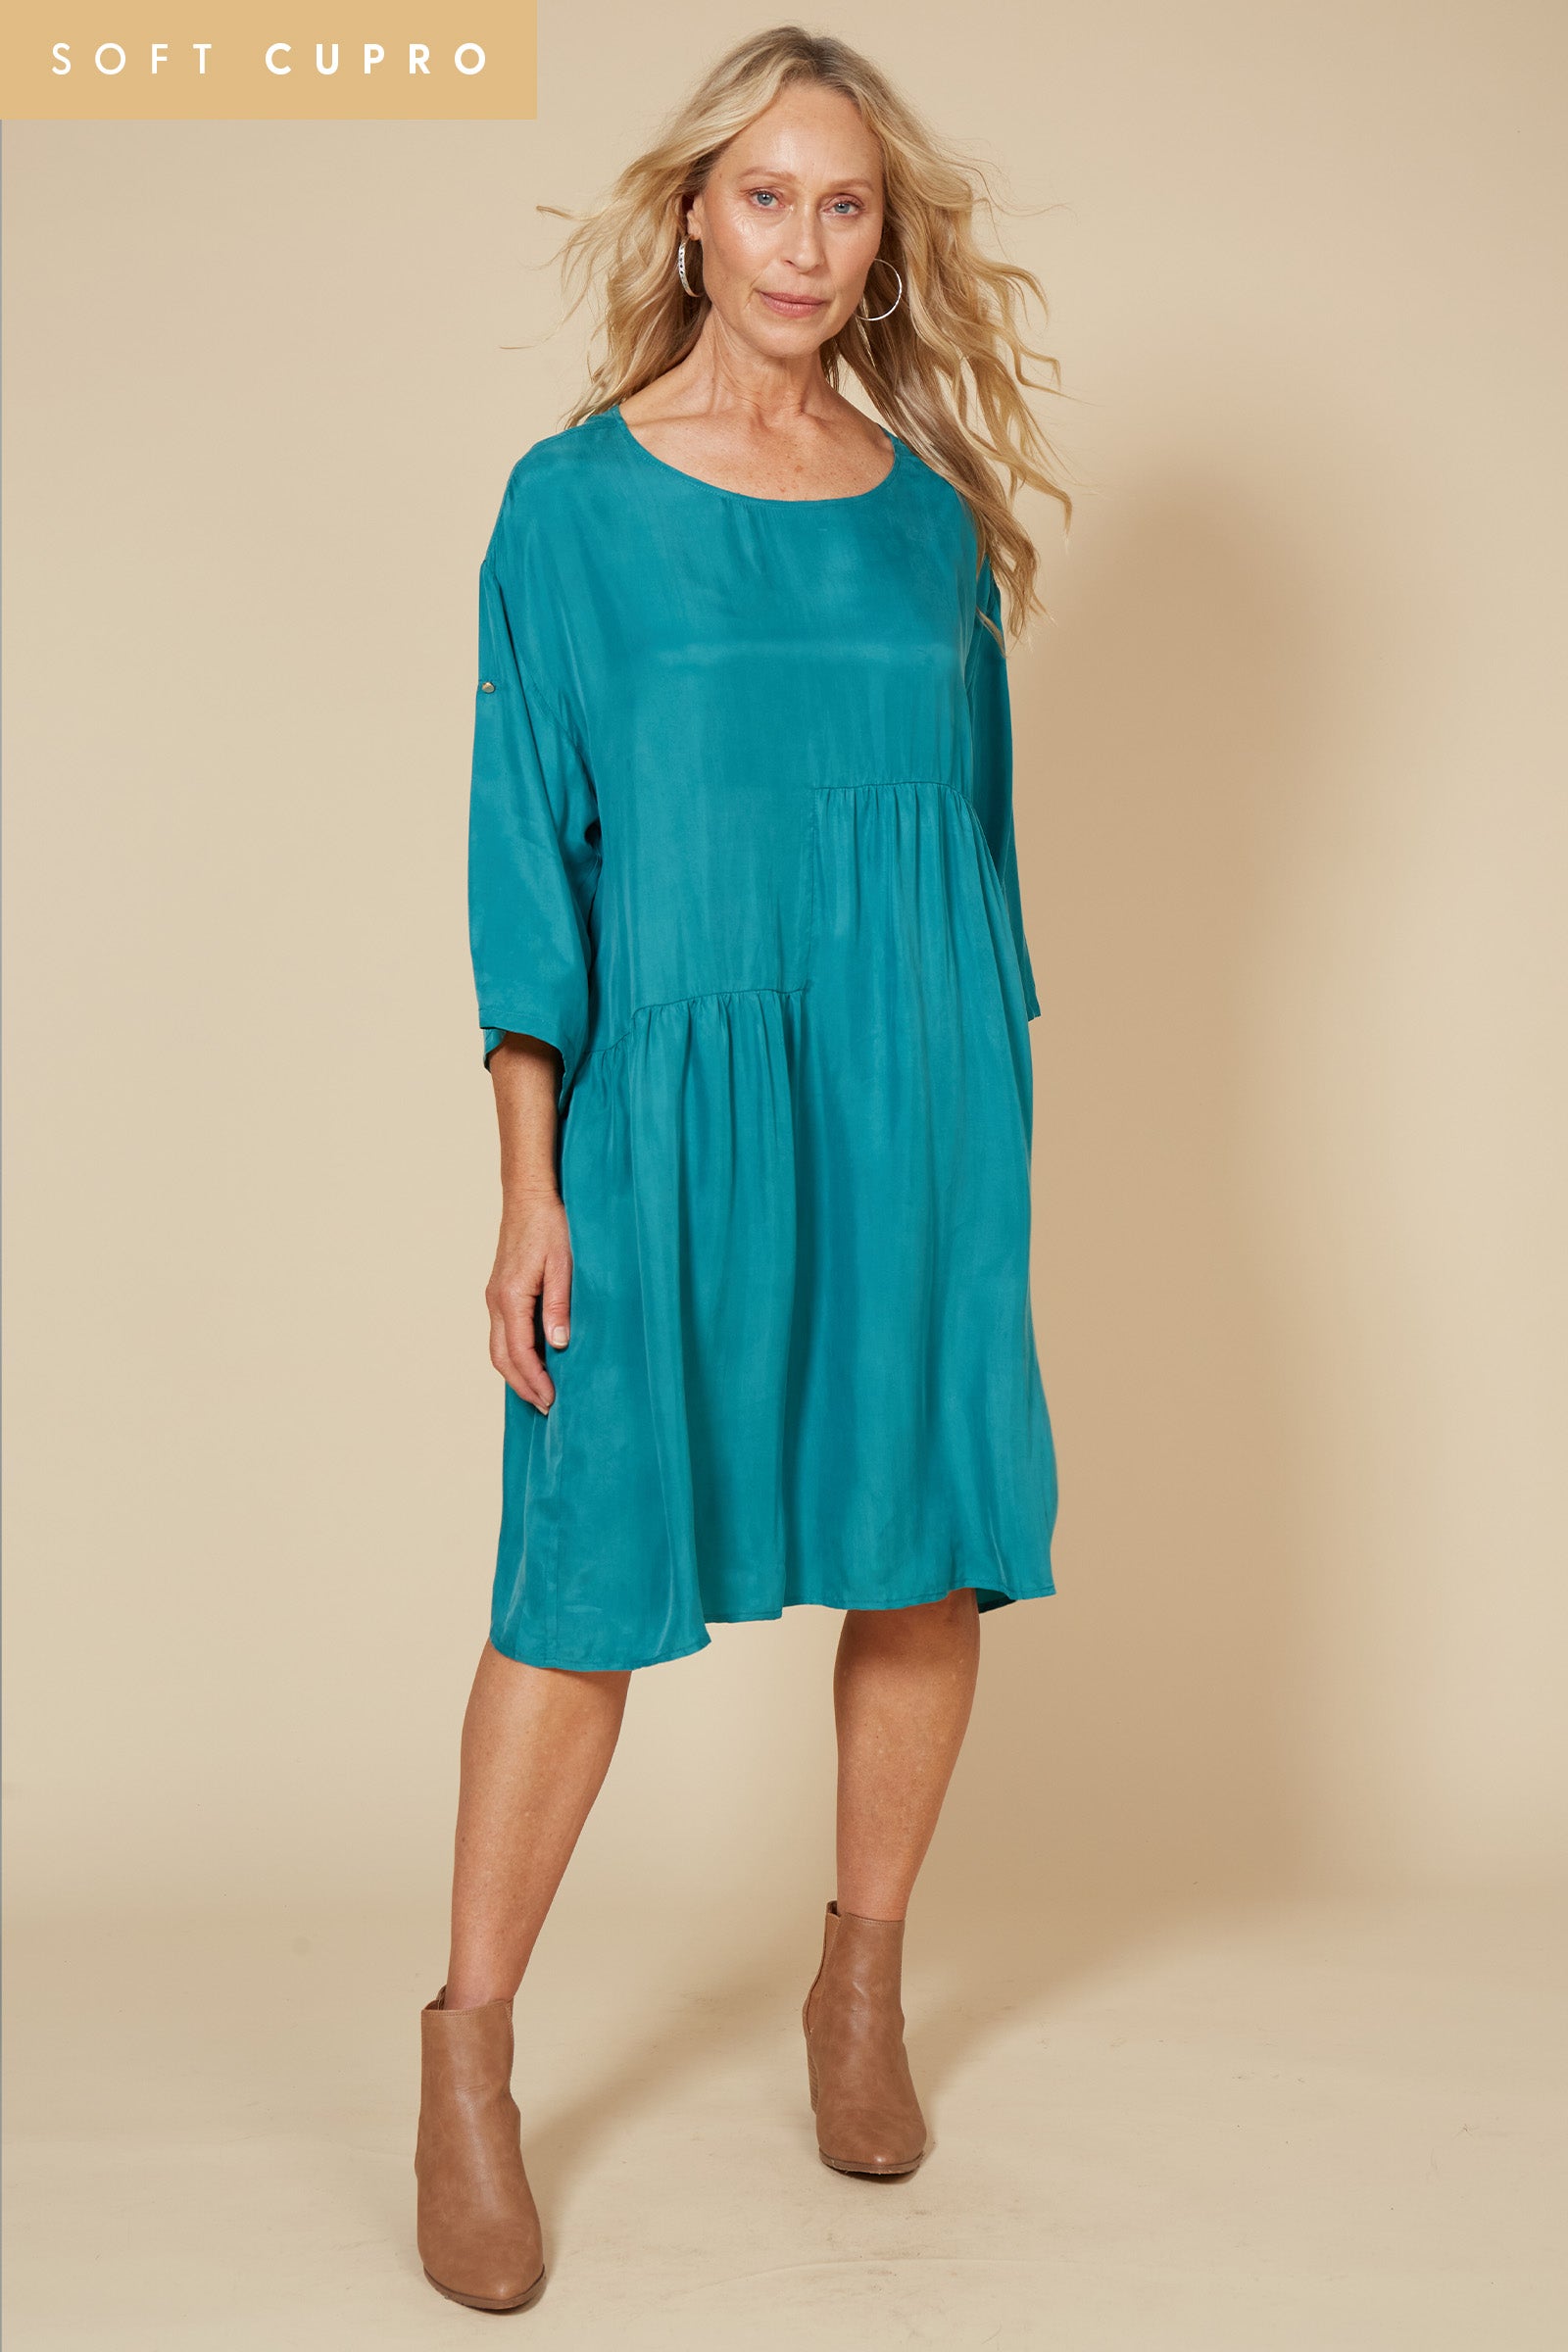 Vienetta Dress - Teal - eb&ive Clothing - Dress 3/4 Length